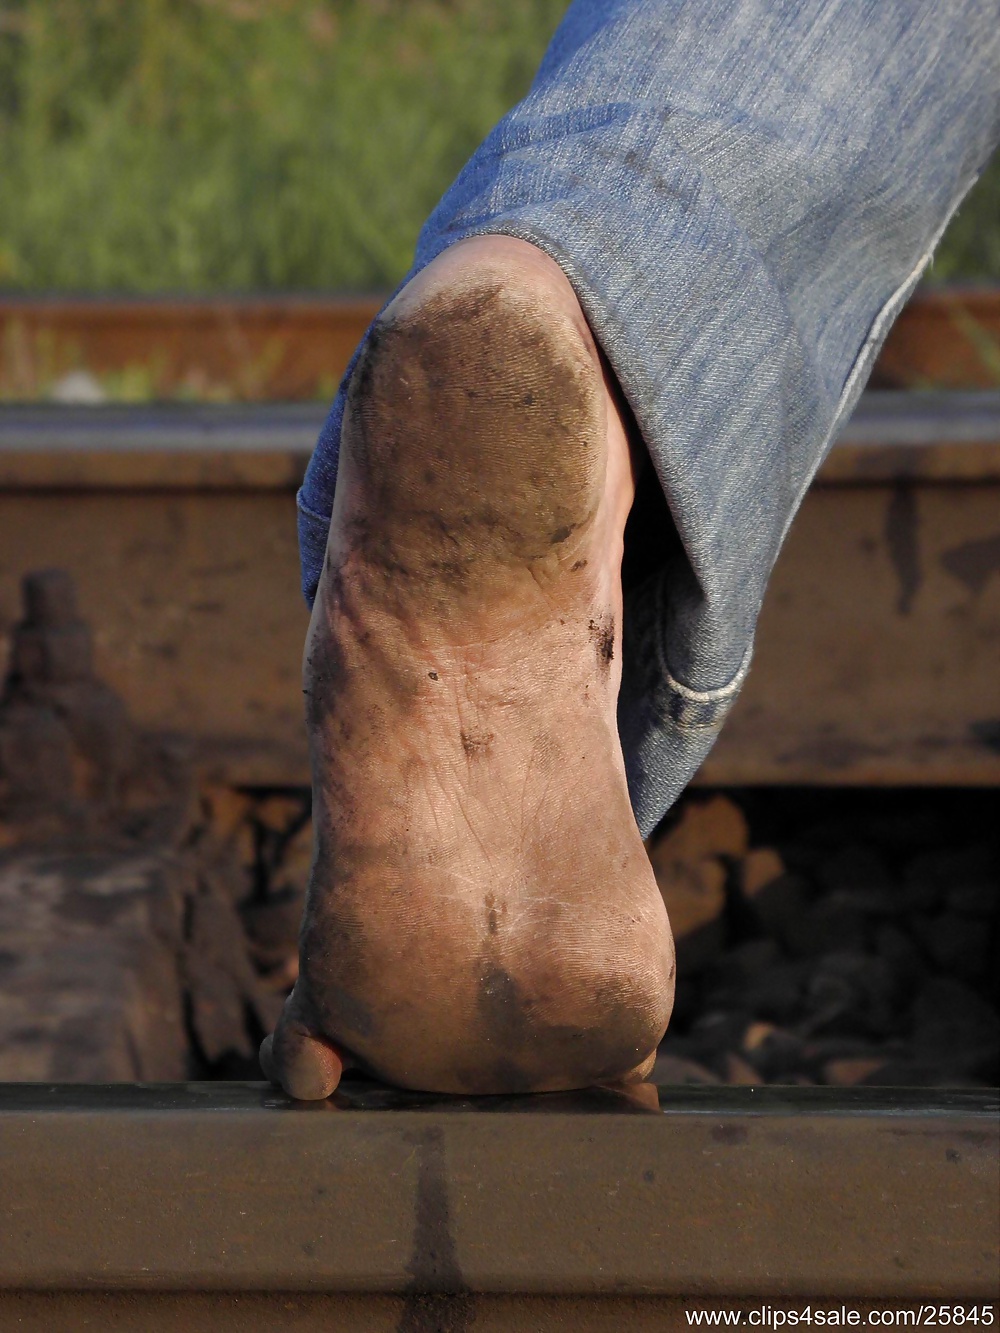 Porn image Railway dirty feet